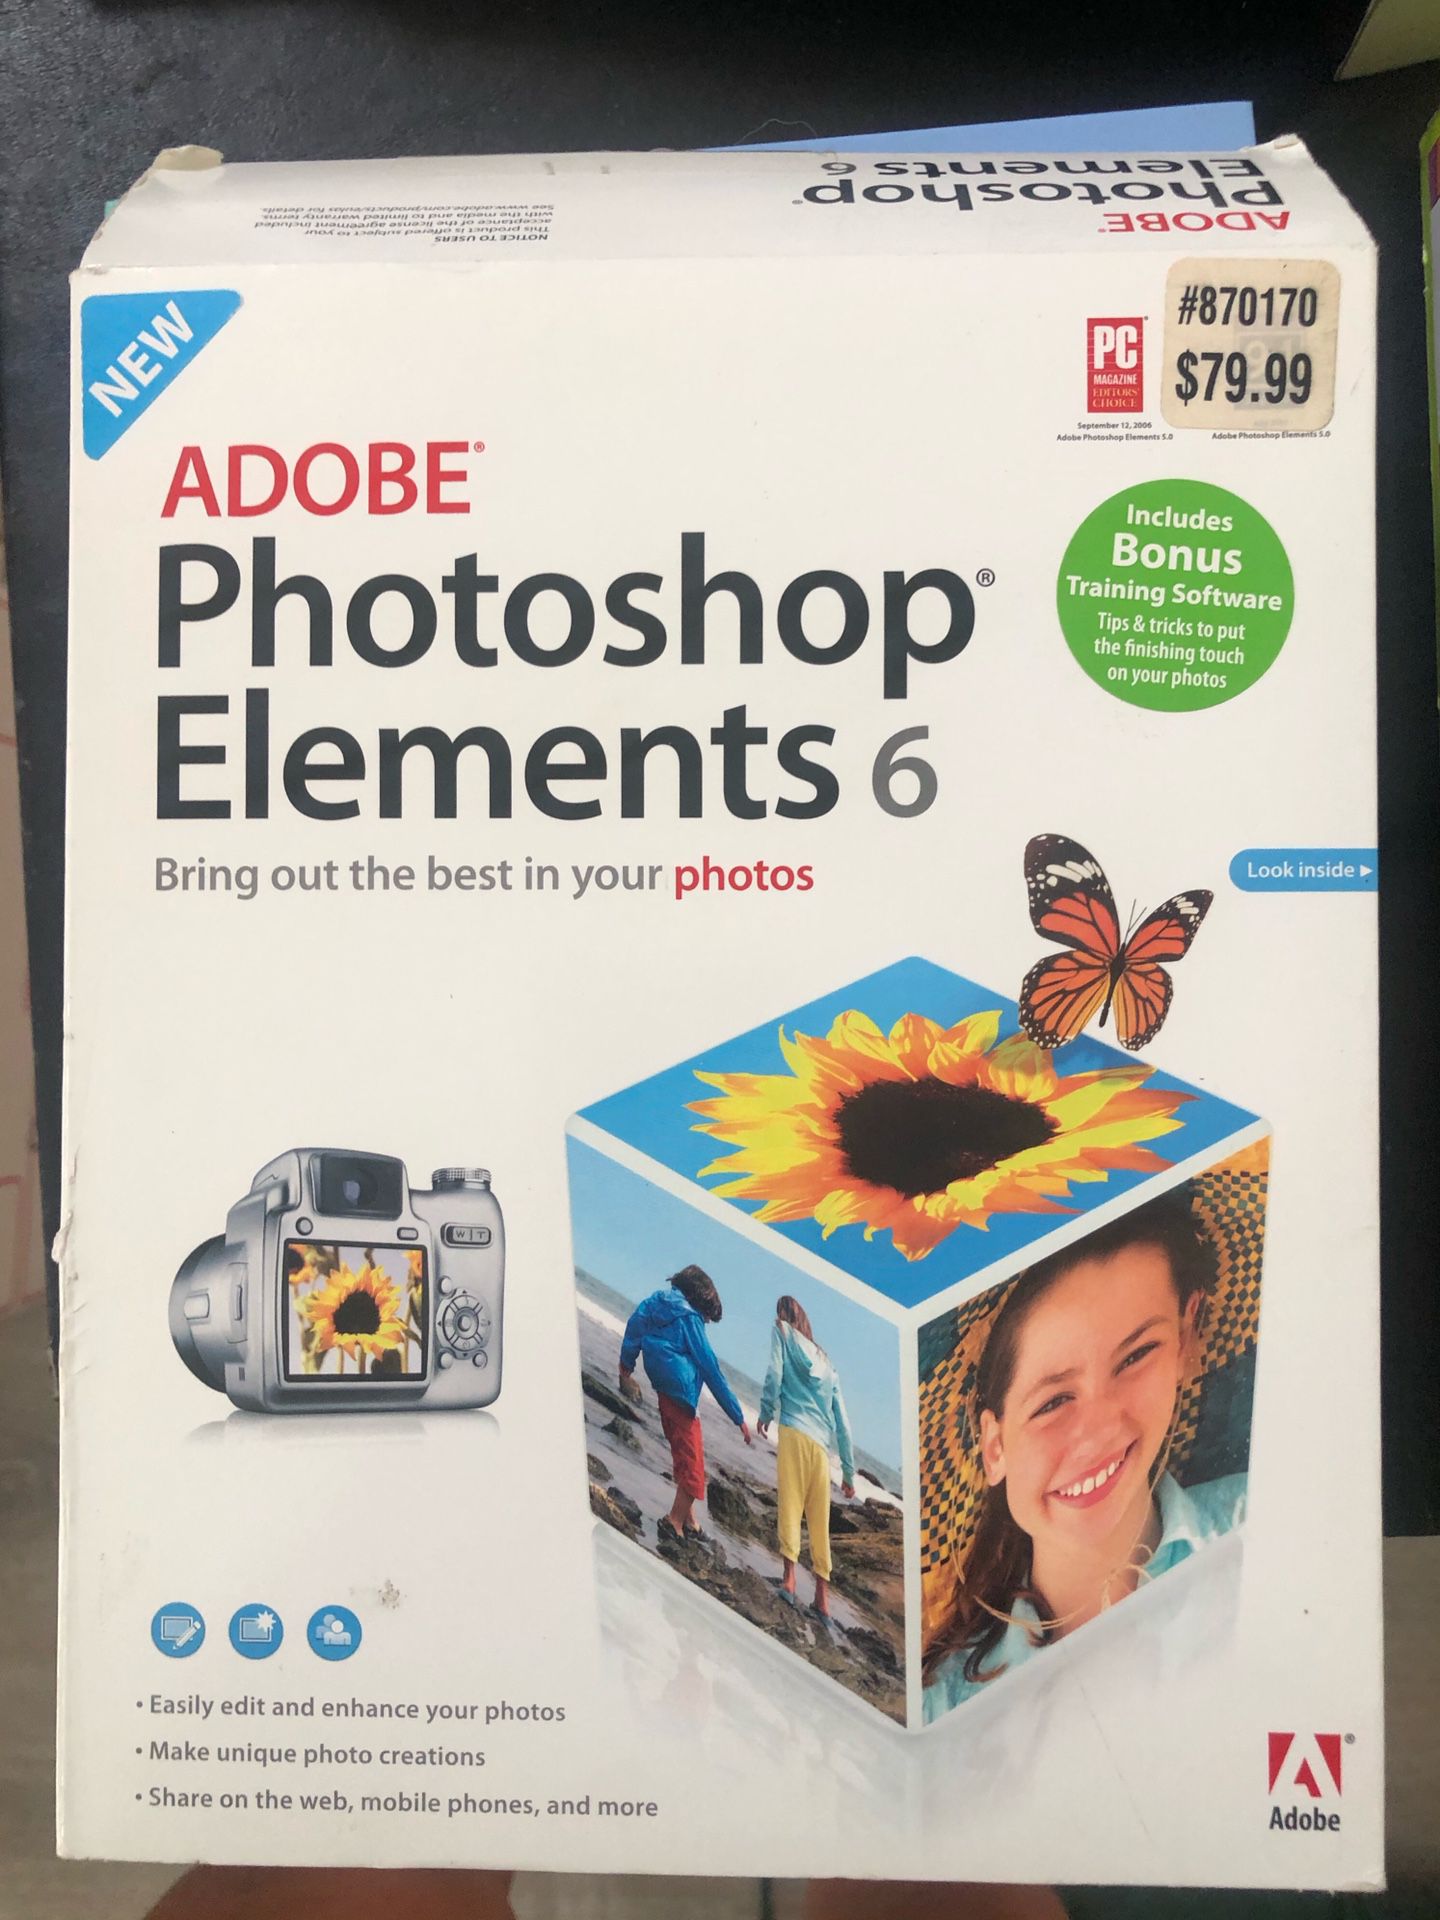 Adobe Photoshop 6